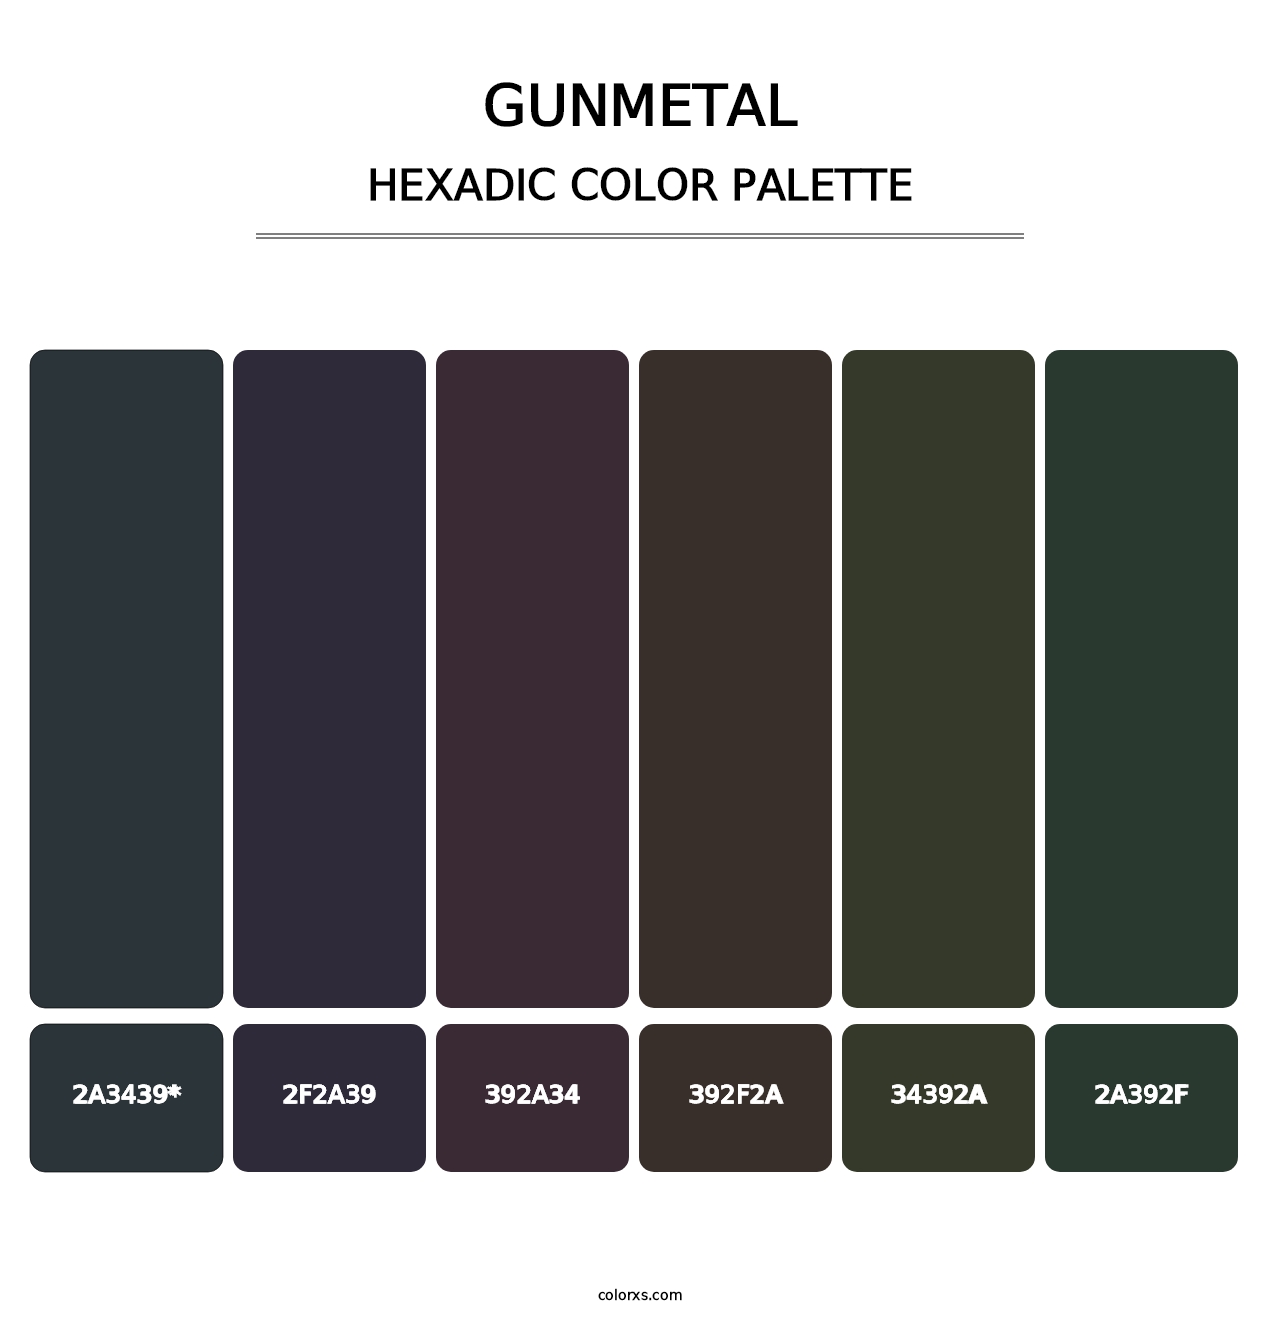 Gunmetal - Hexadic Color Palette